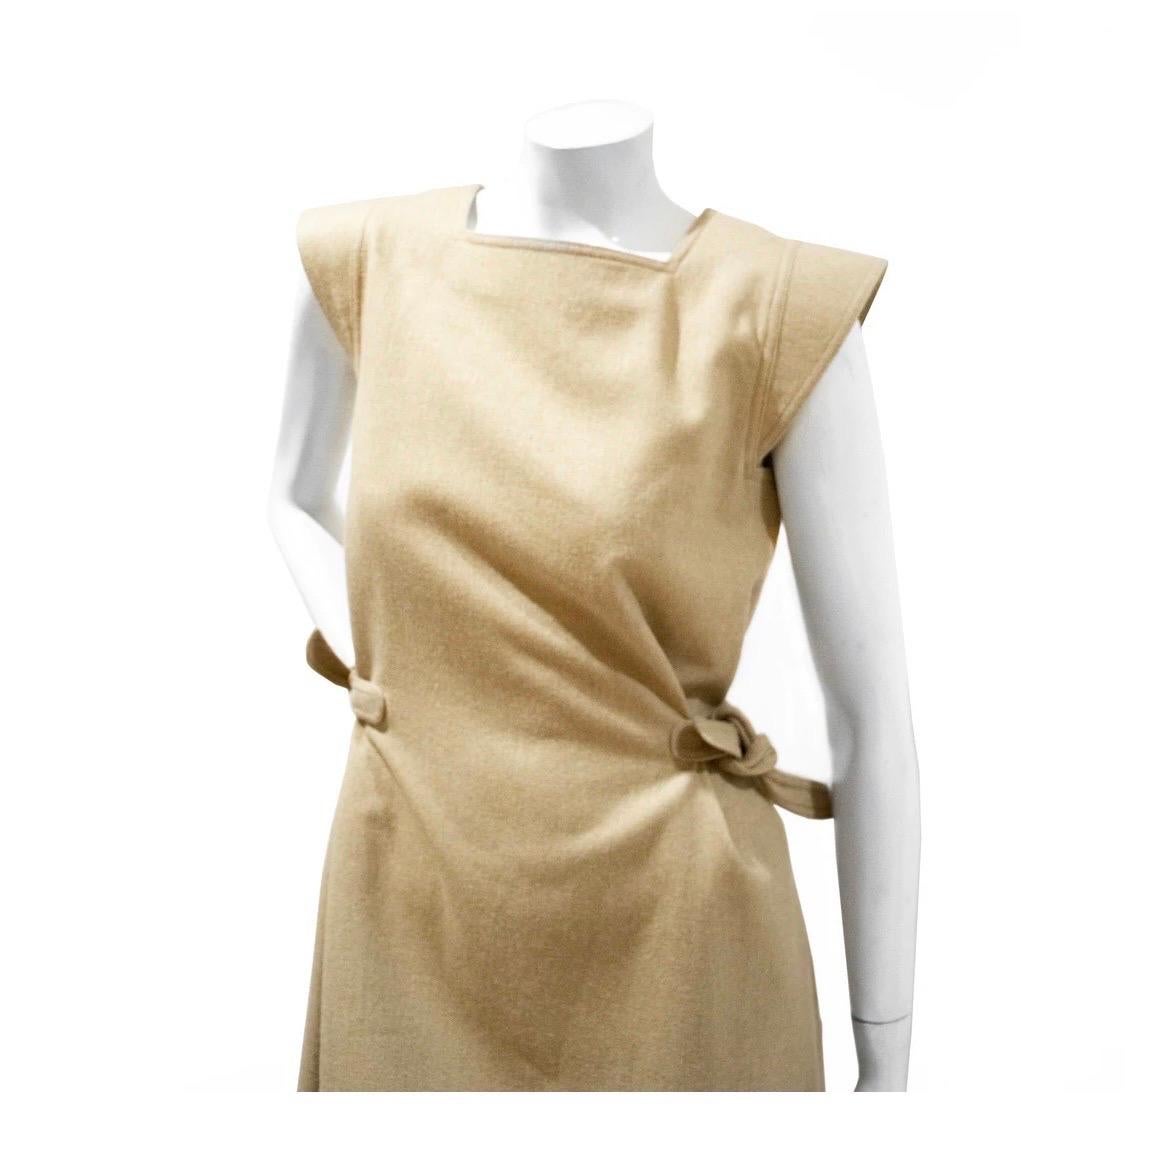 70s sheath dress